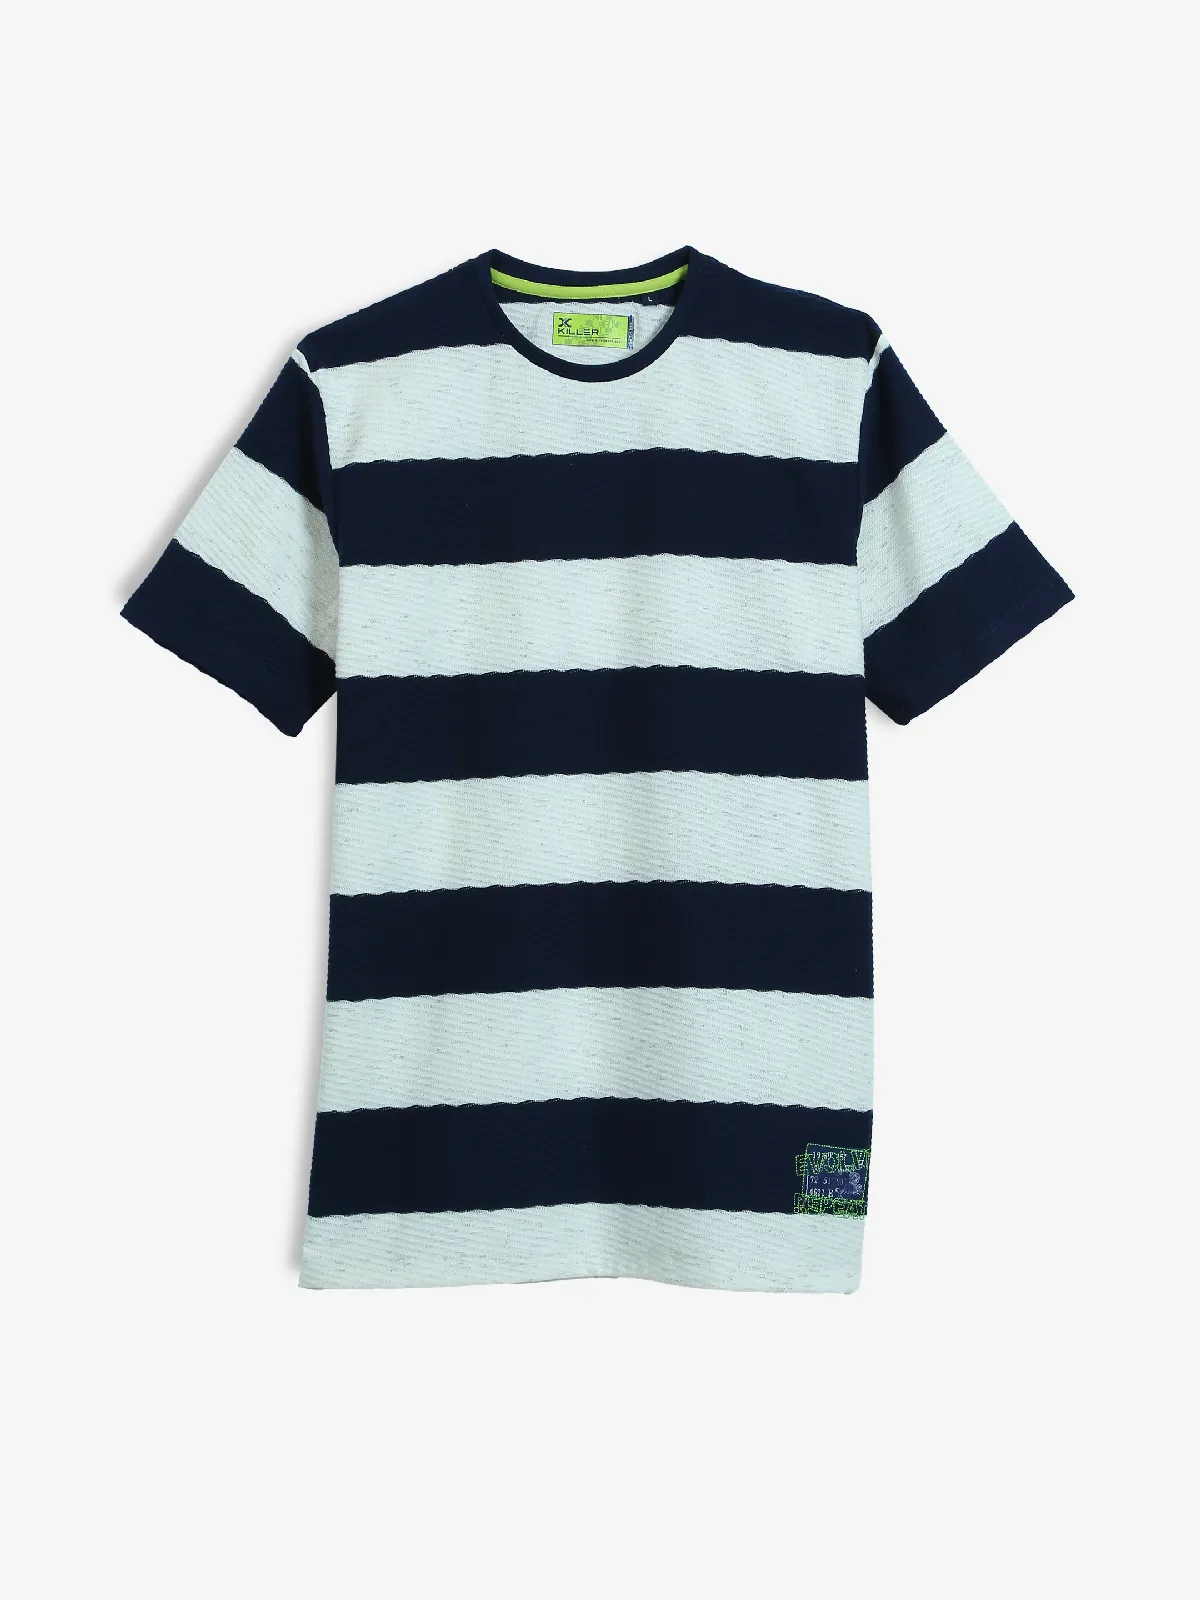 KILEER navy and white stripe cotton t-shirt